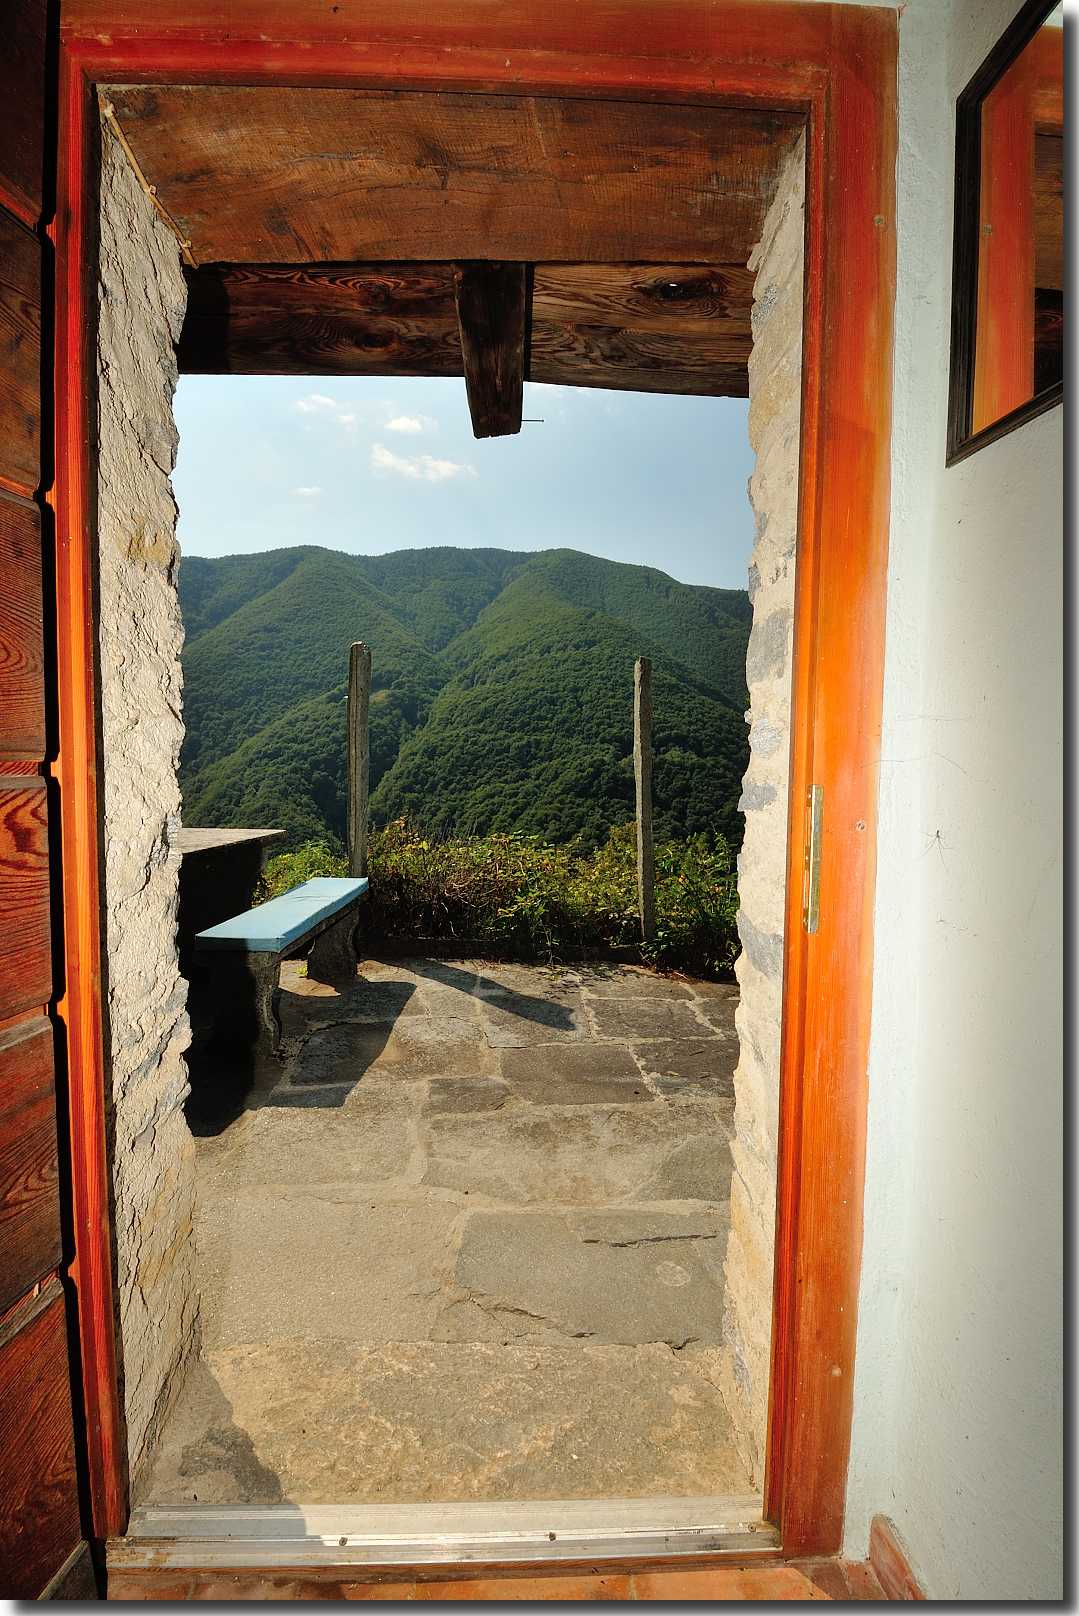 Rustico Pasmina - Piecia - Mosogno (Valle Onsernone) [ Aussicht ]